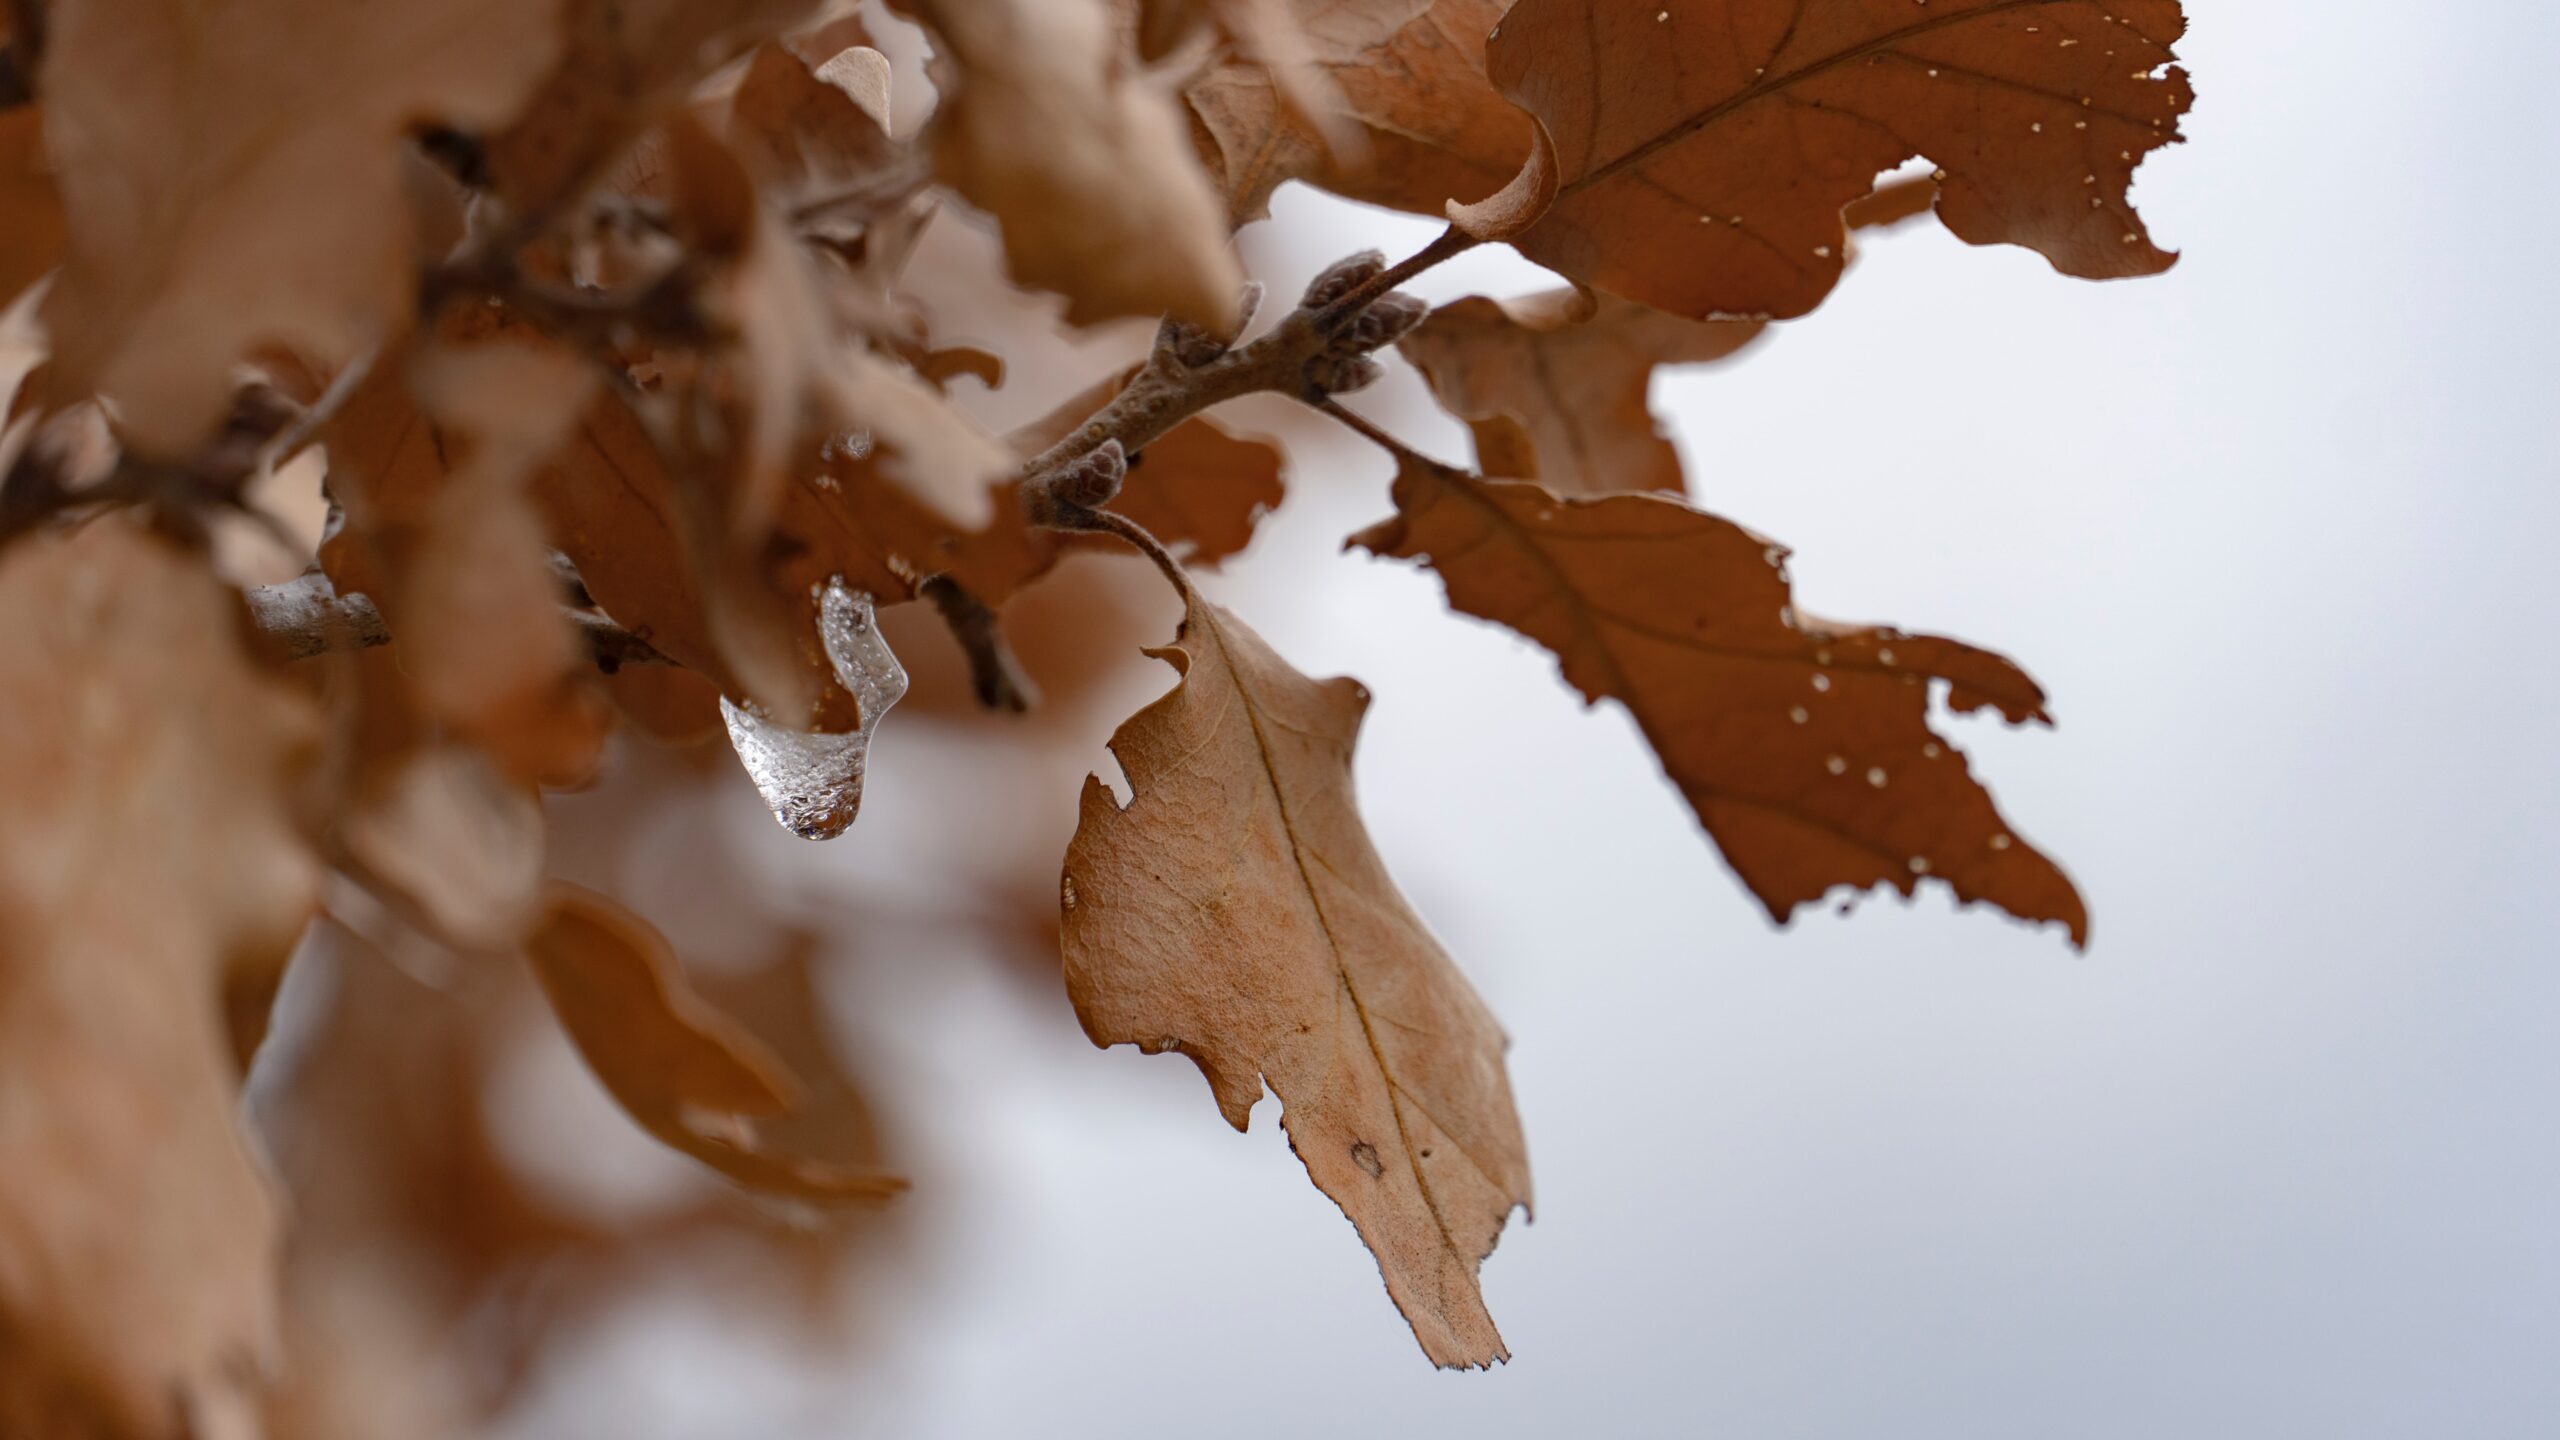 Dallas oak tree showing signs of oak wilt with brown, wilting leaves; underscore for the importance of oak wilt prevention